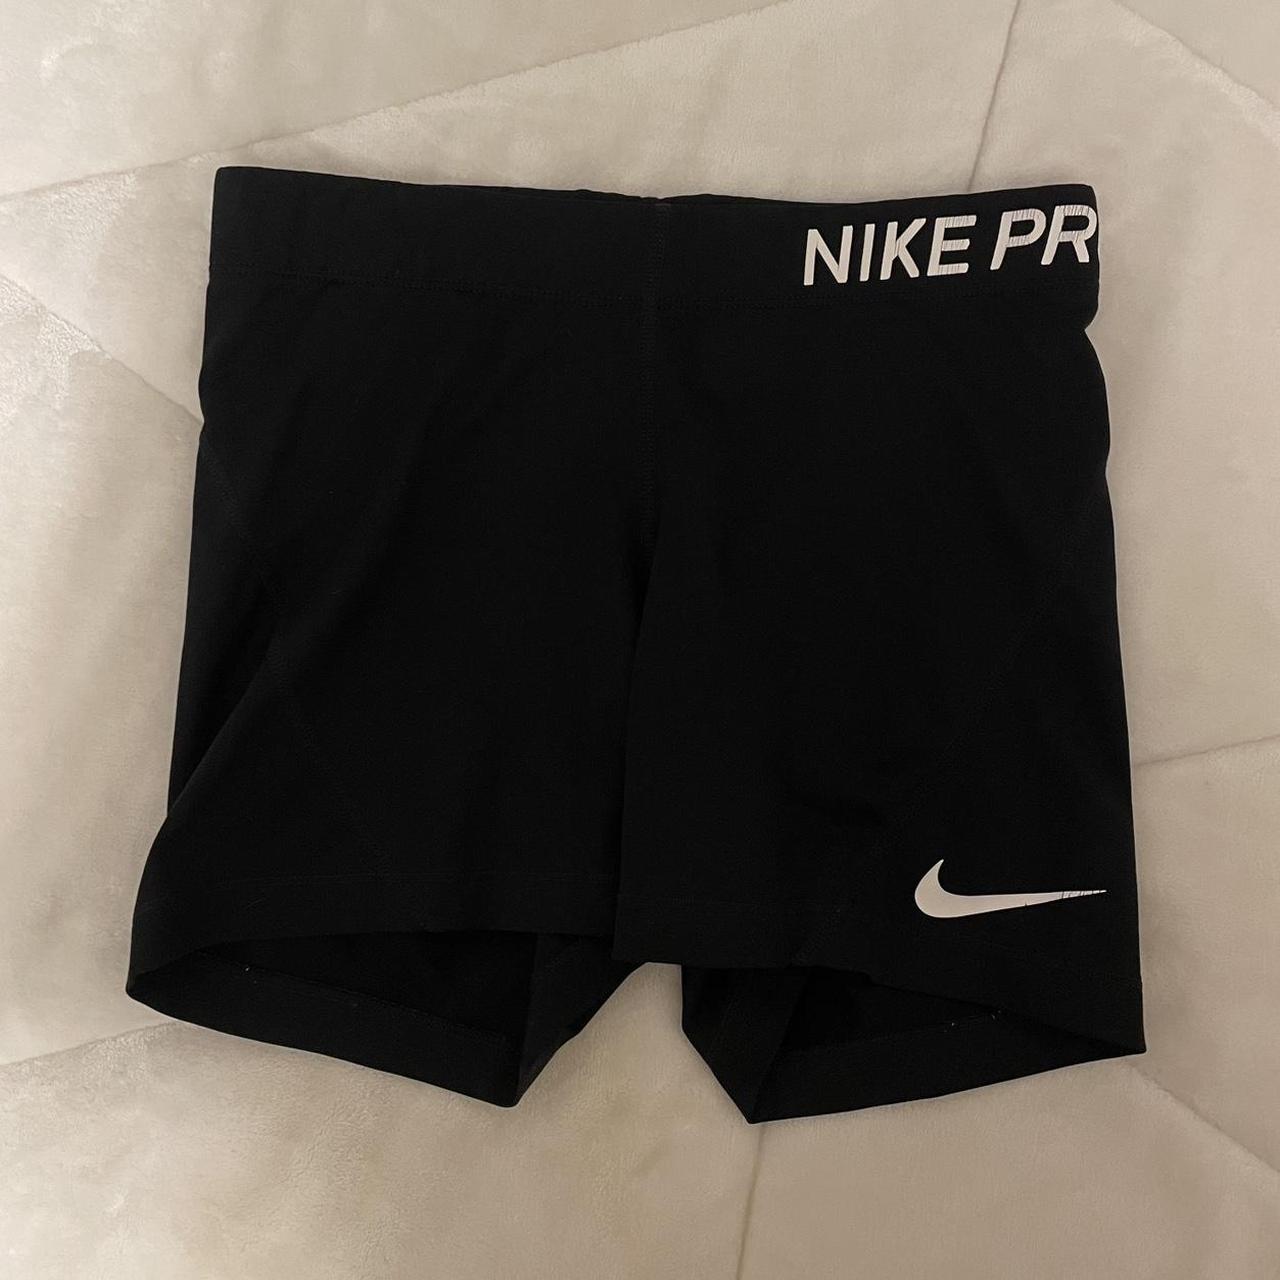 Nike Pro black spandex shorts // slightly worn but... - Depop